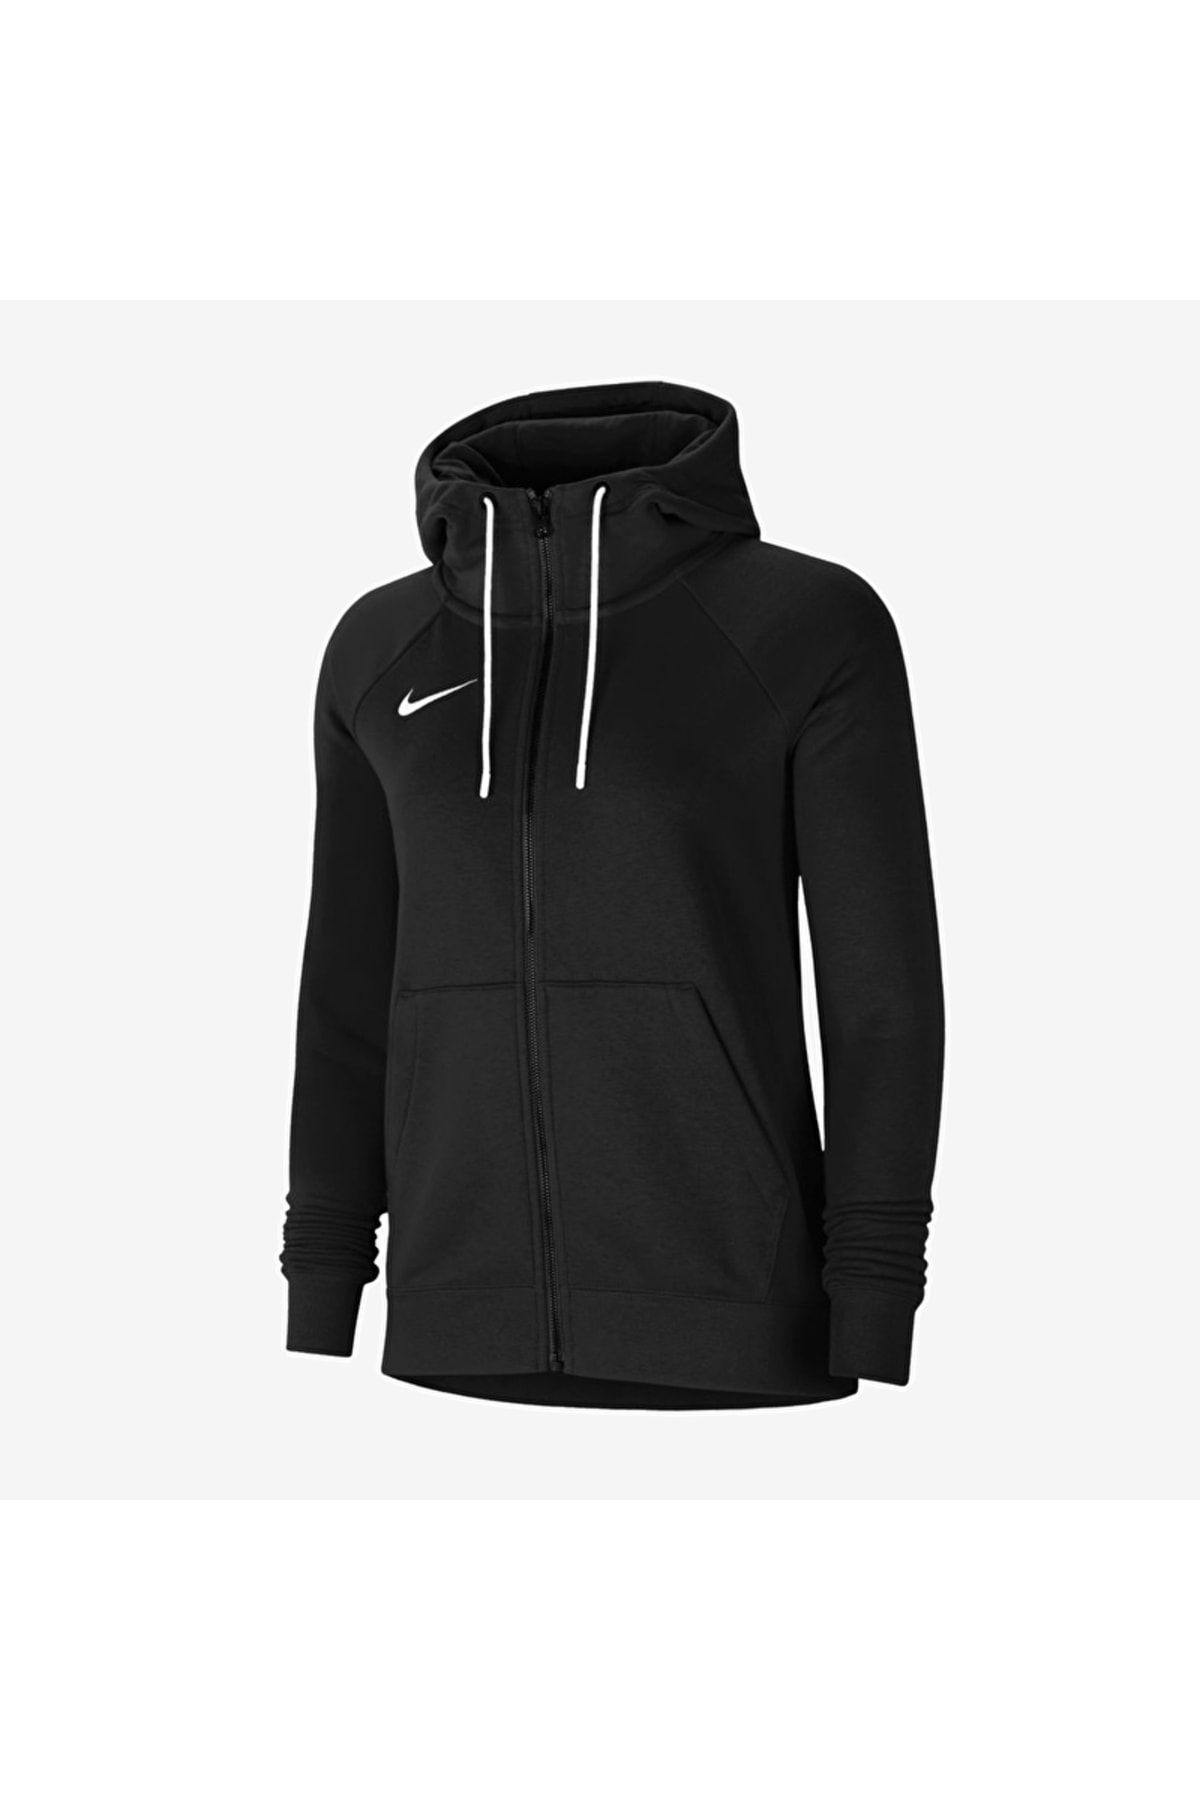 Nike Cw6955-010 Dry Park 20 Kadın Sweatshirt